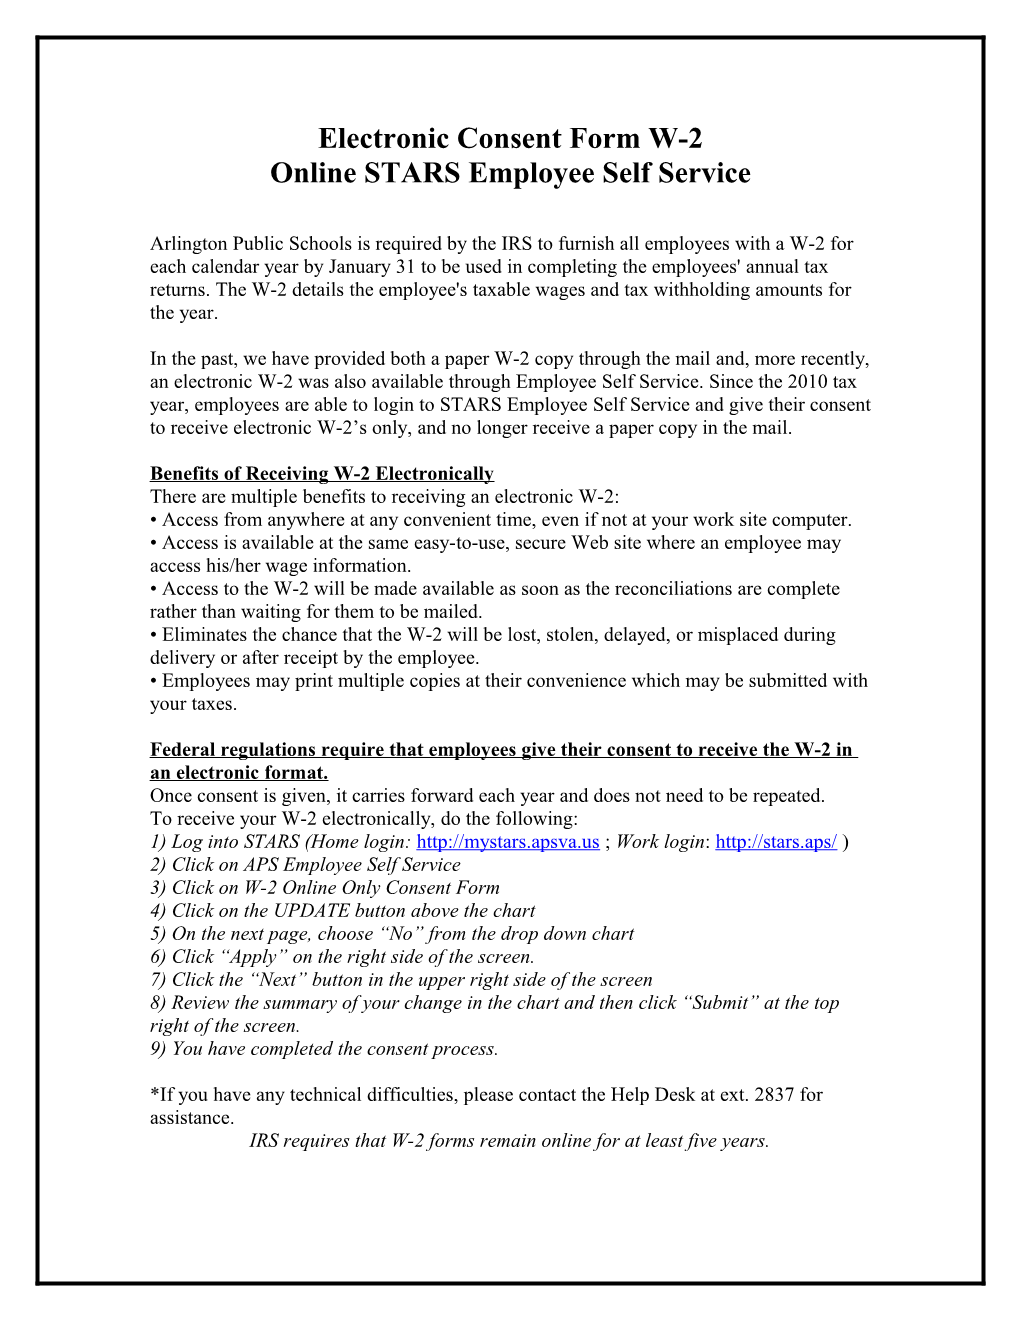 Electronic Form W-2 Online STARS Employee Self Service